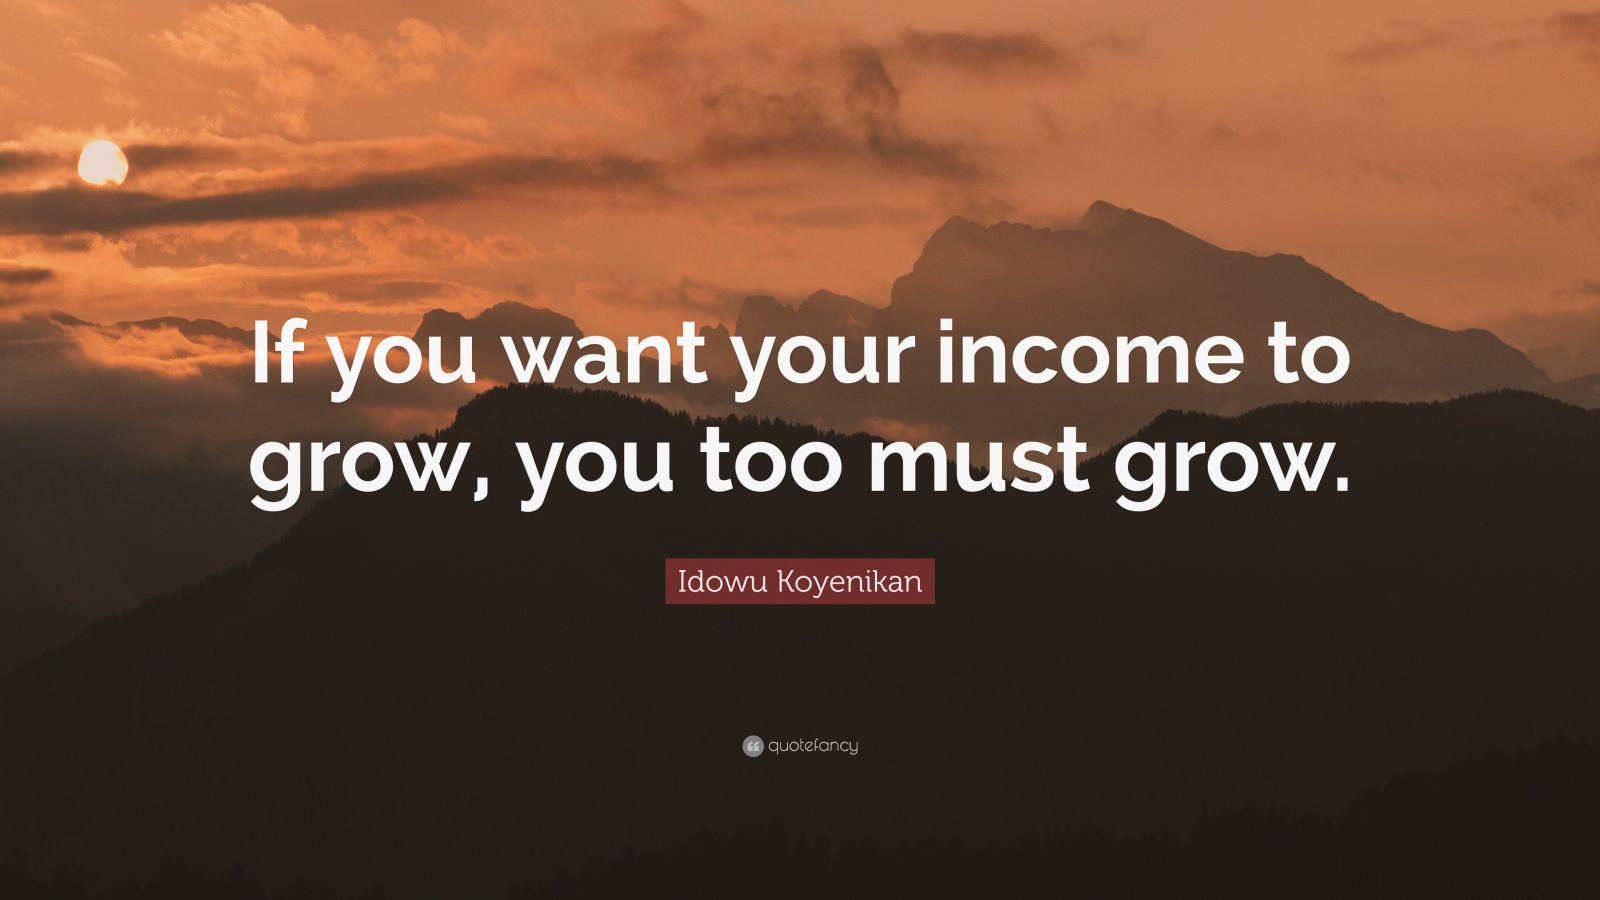 Idowu Koyenikan Quote “if You Want Your Income To Grow You Too Must Grow”